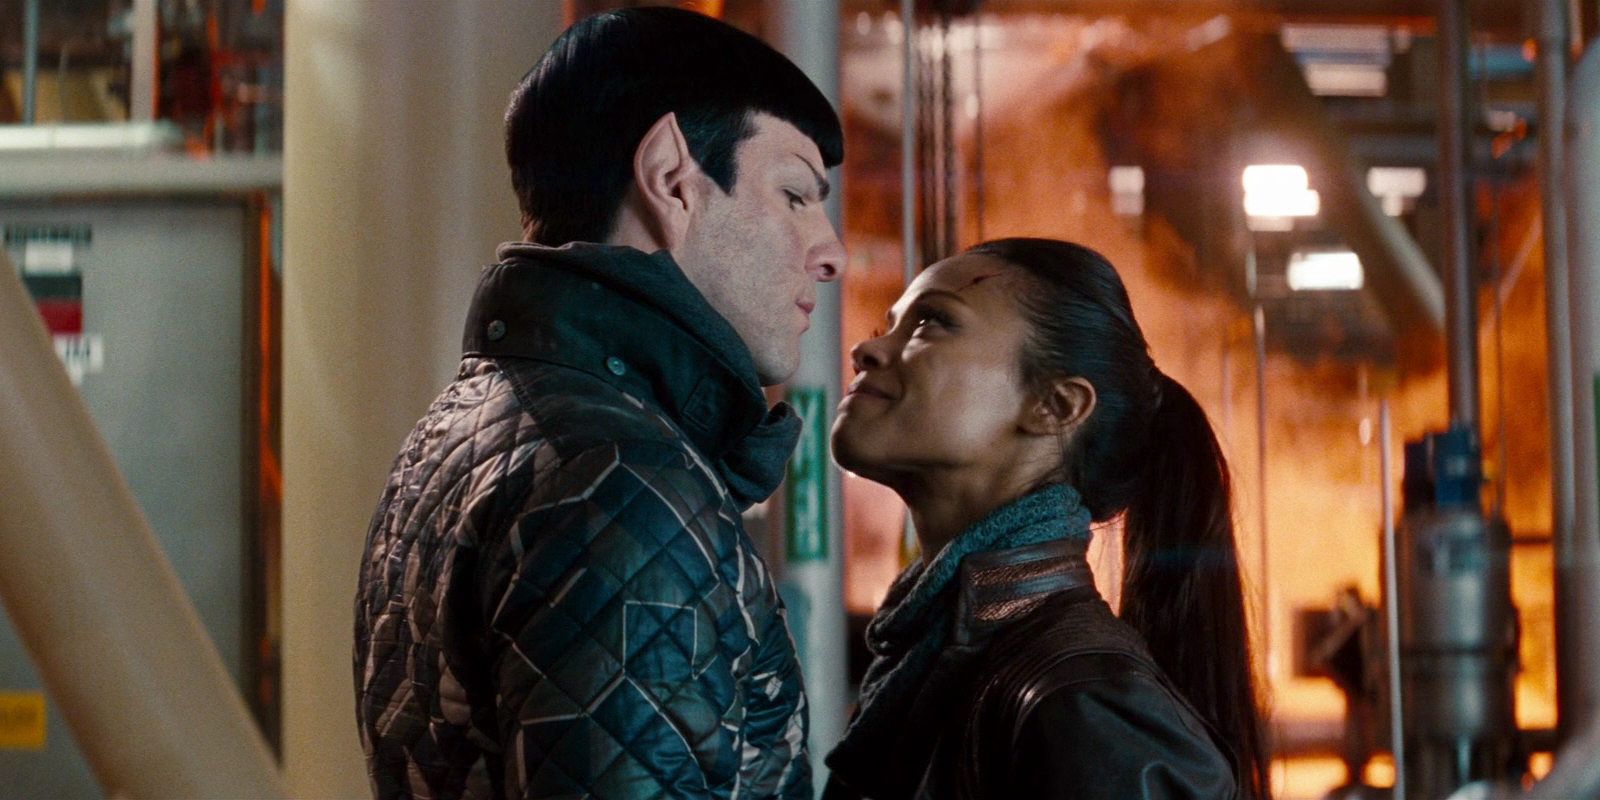 Spock and Uhura from Star Trek